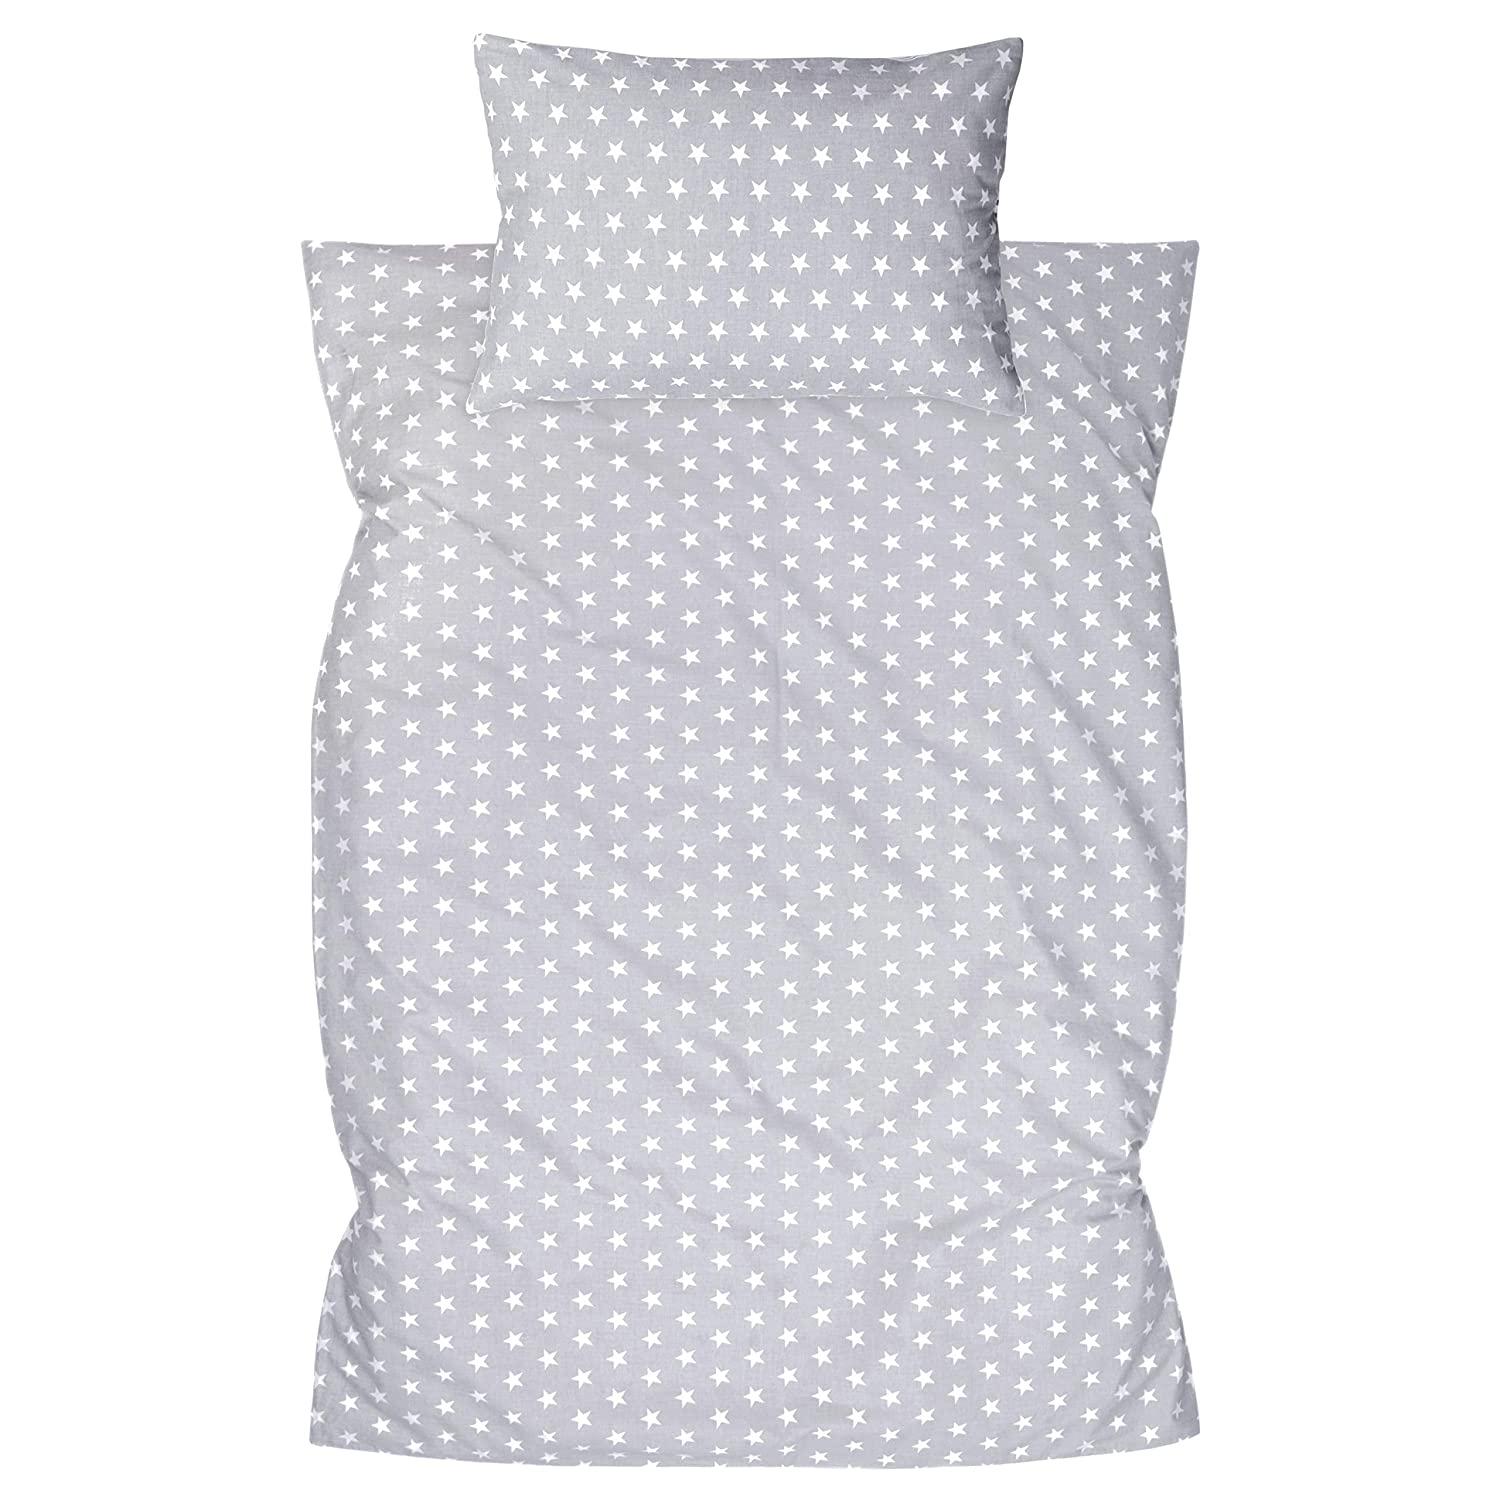 Amilian Children\'s Bed Linen, 2-Piece Set, 100% Cotton Baby Bedding Set for Baby, Duvet Cover 100 x 135 cm, Pillowcase 40 x 60 cm, with Envelope Closure